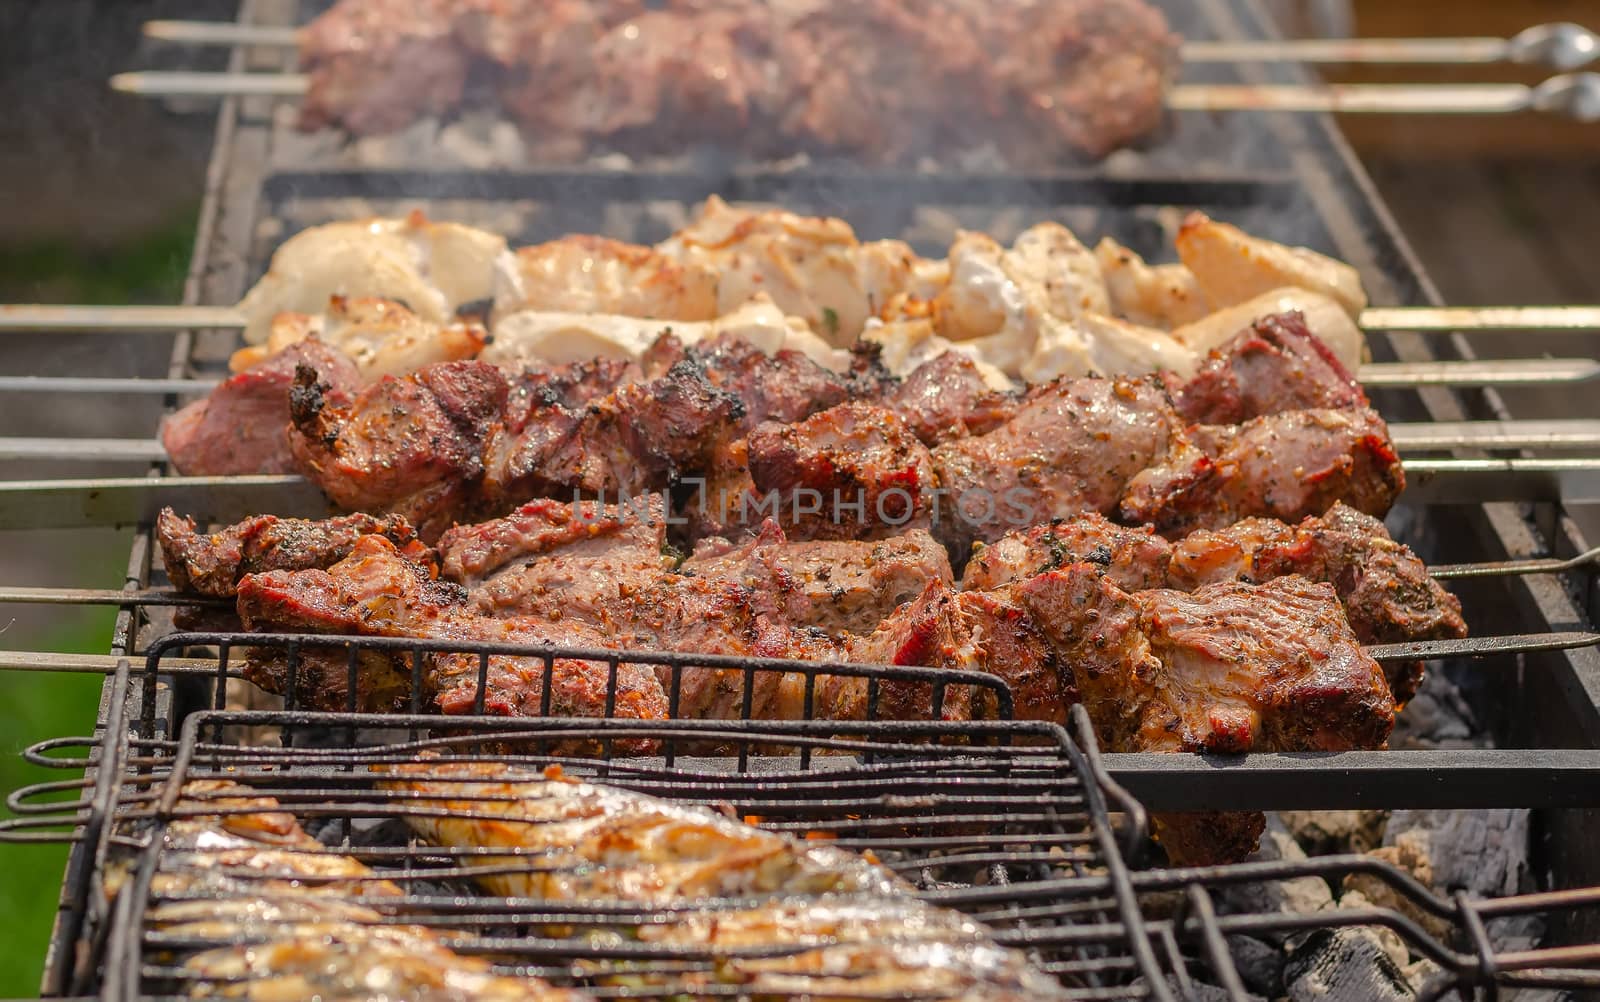 Marinated shashlik or kebab preparing on a barbecue grill over c by bormash